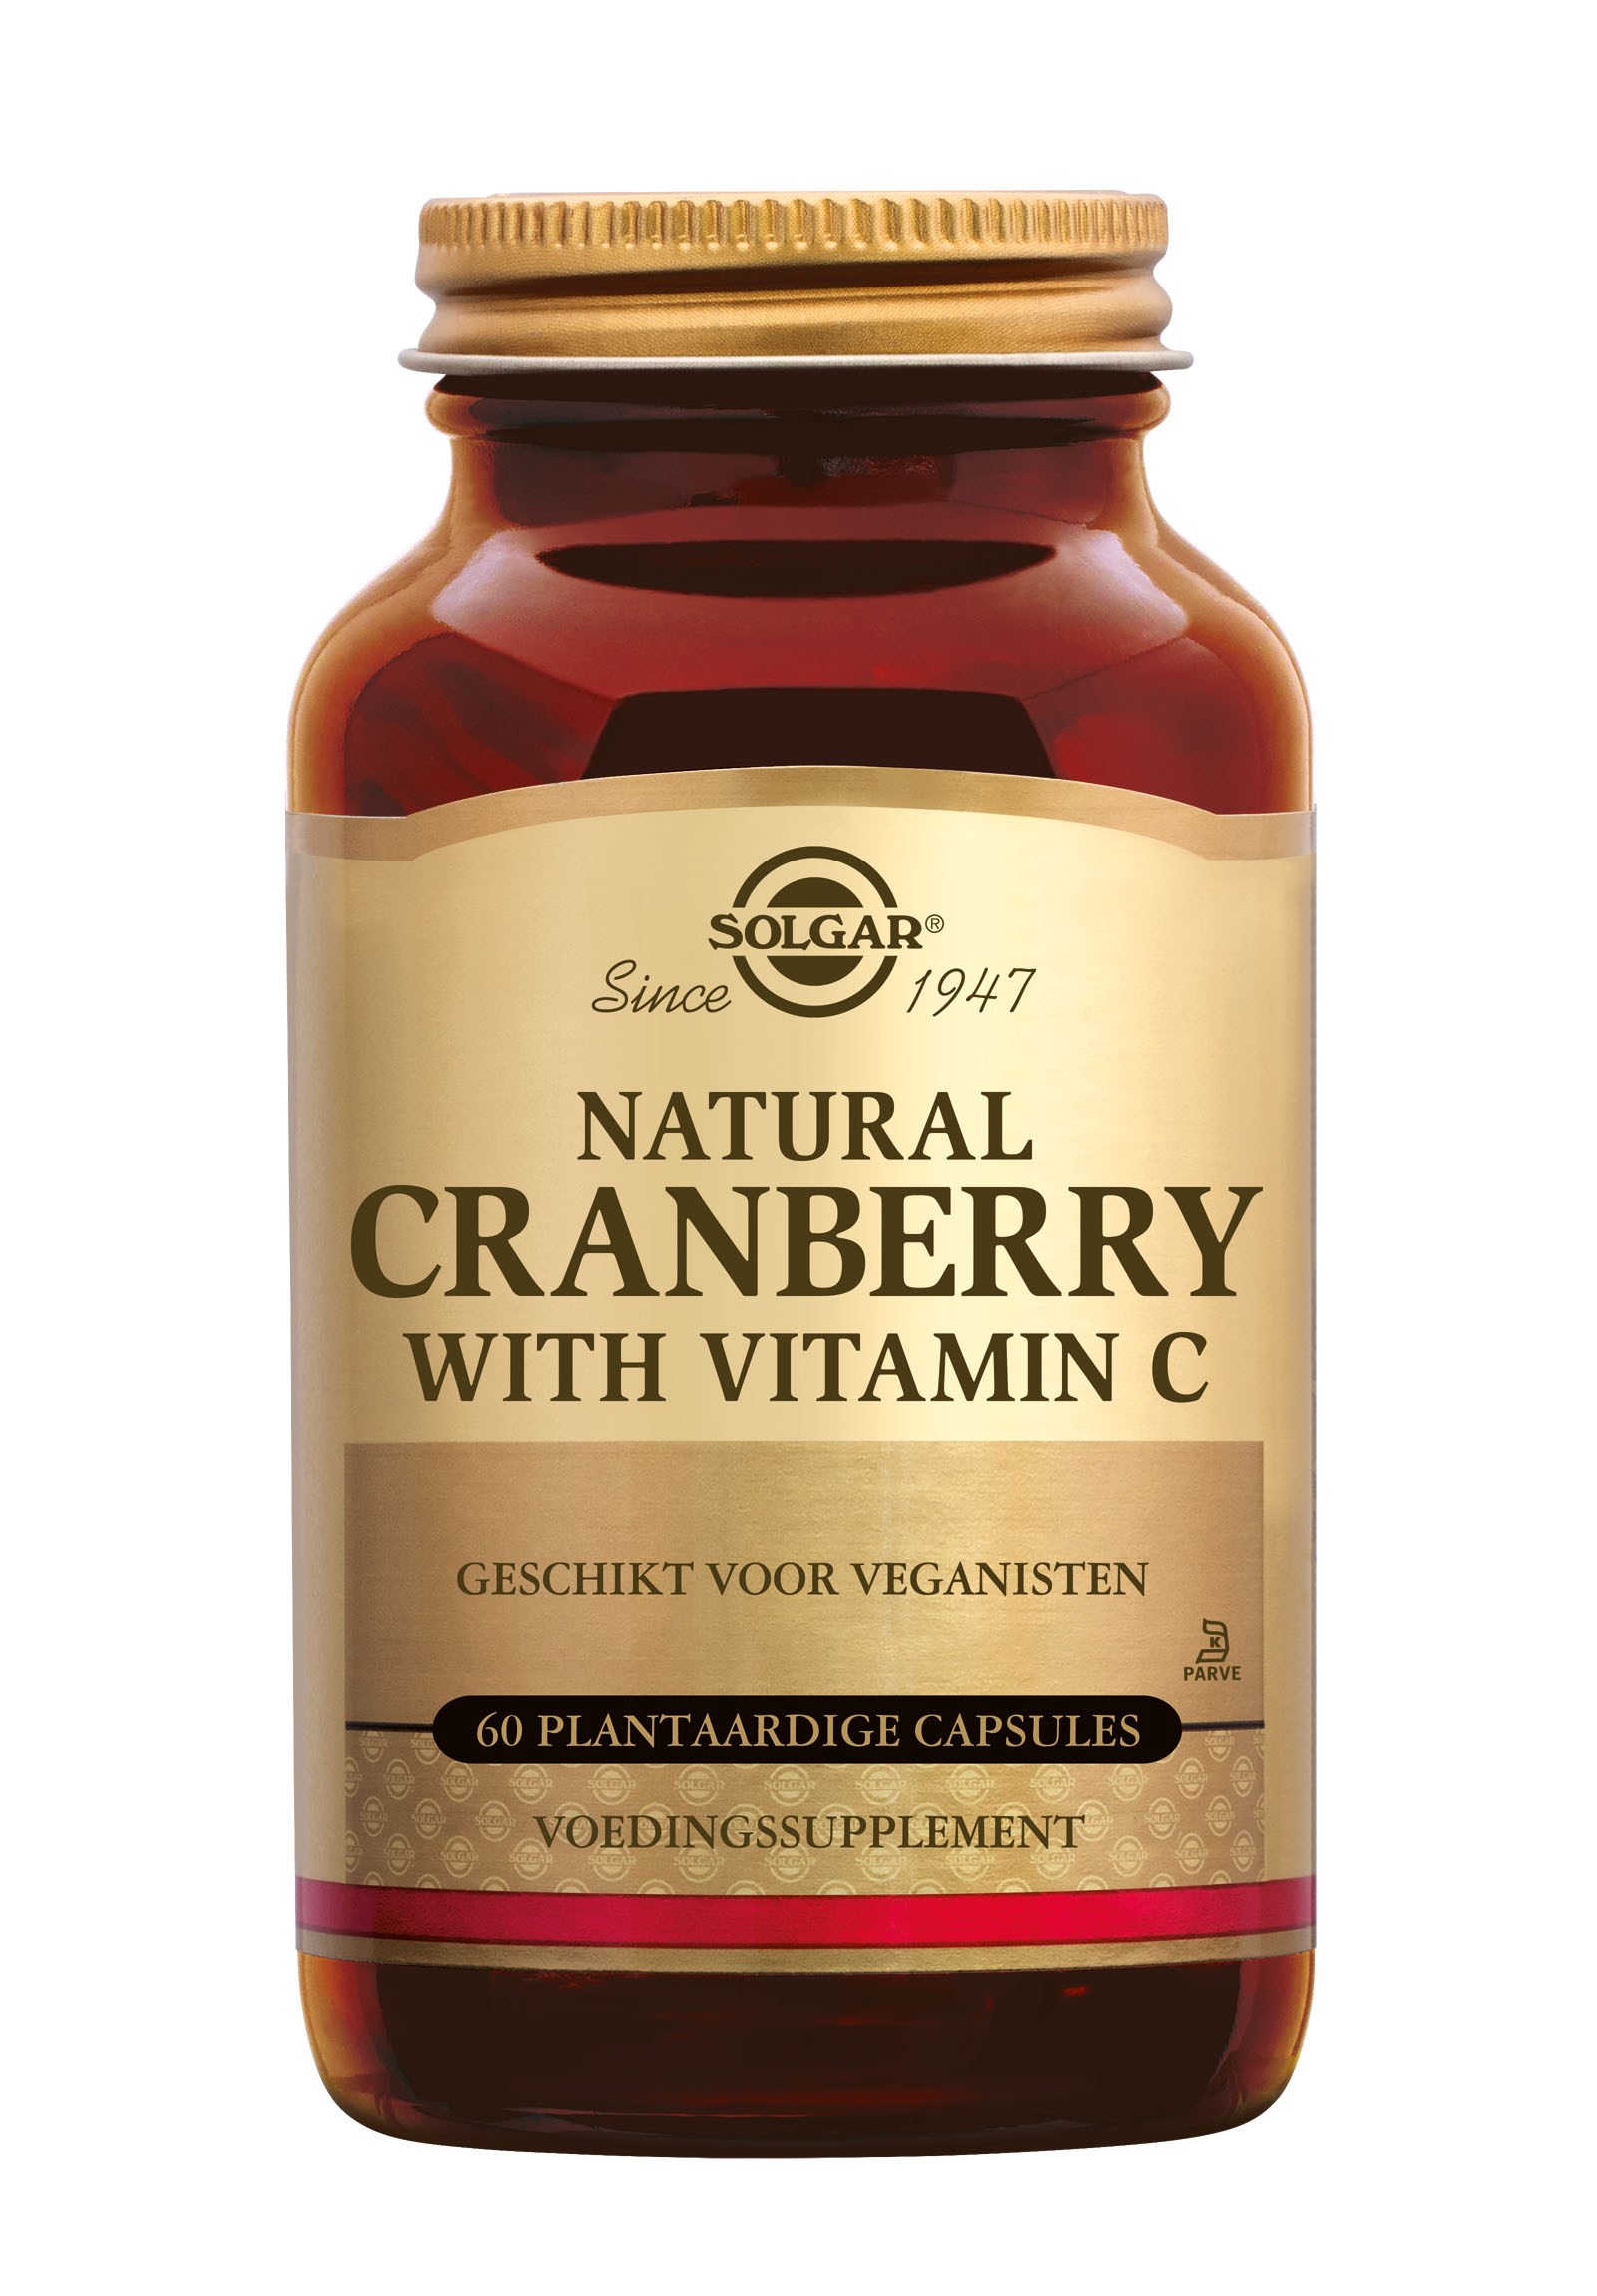 Solgar Cranberry with Vitamin C (60 stuks)